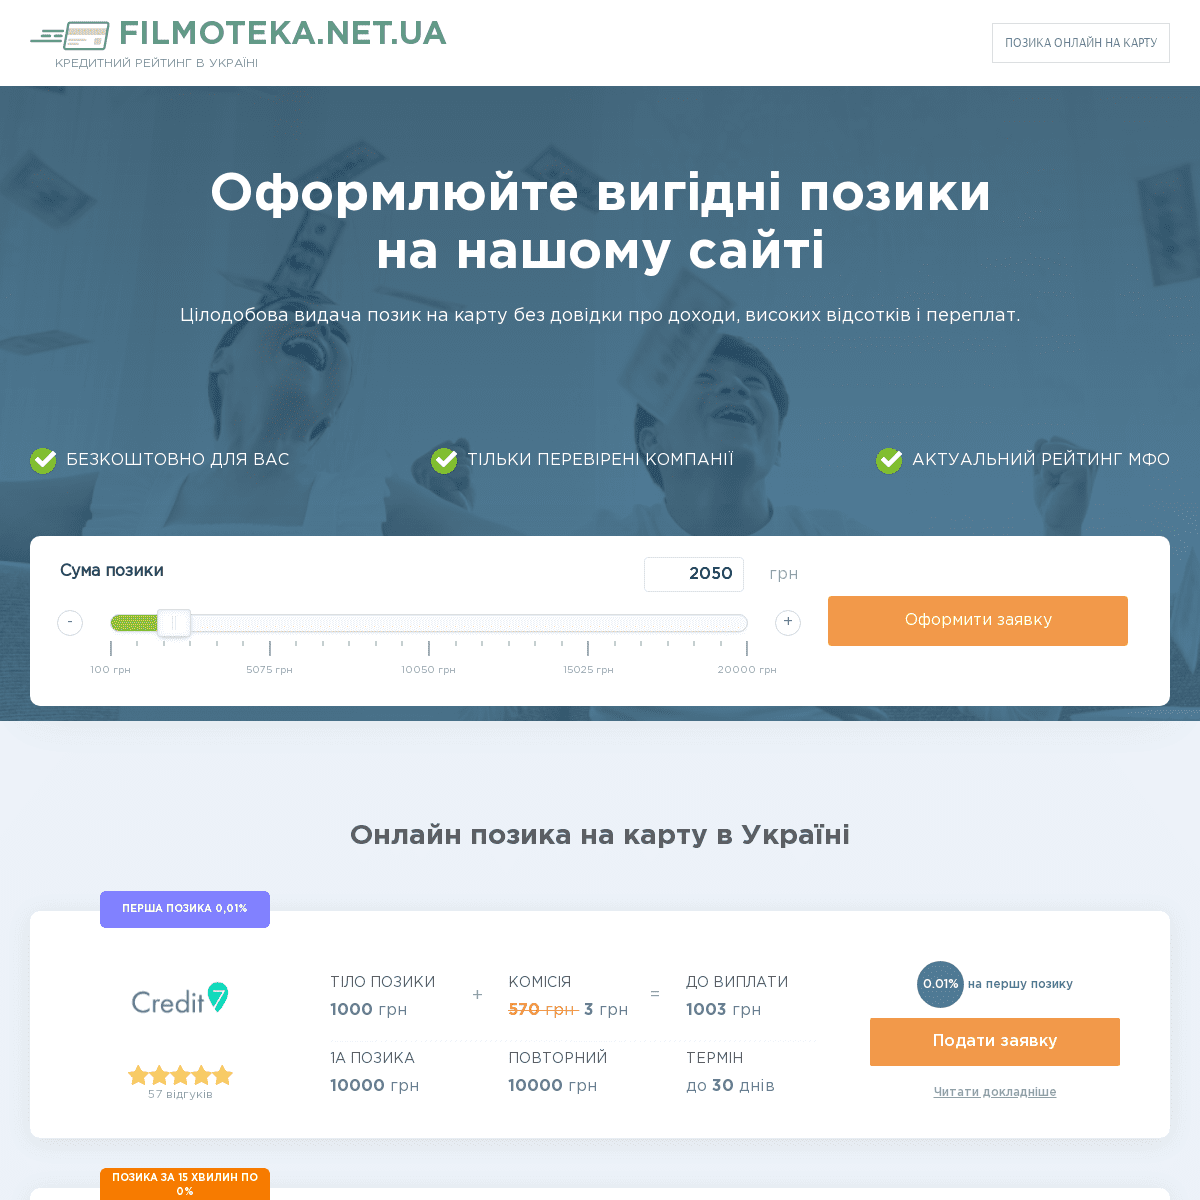 A complete backup of https://filmoteka.net.ua